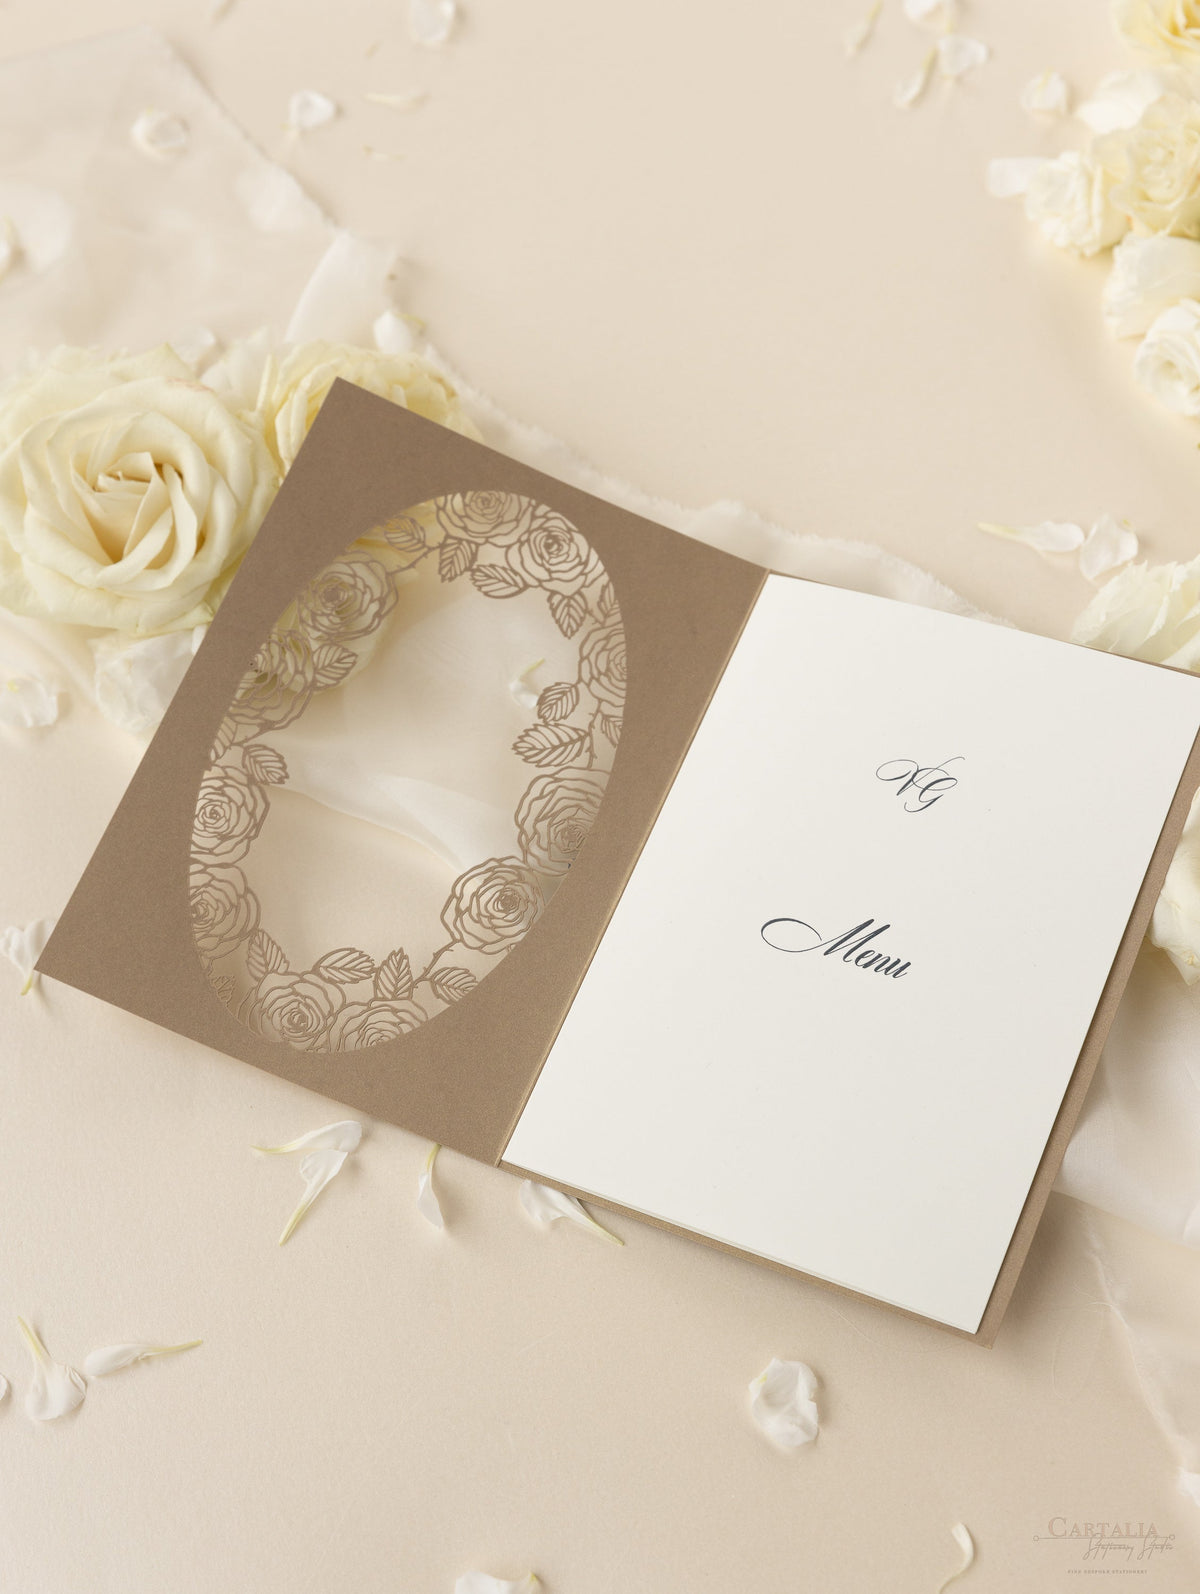 Tarjeta de orden de servicio/menú de boda cortada con láser de rosas románticas